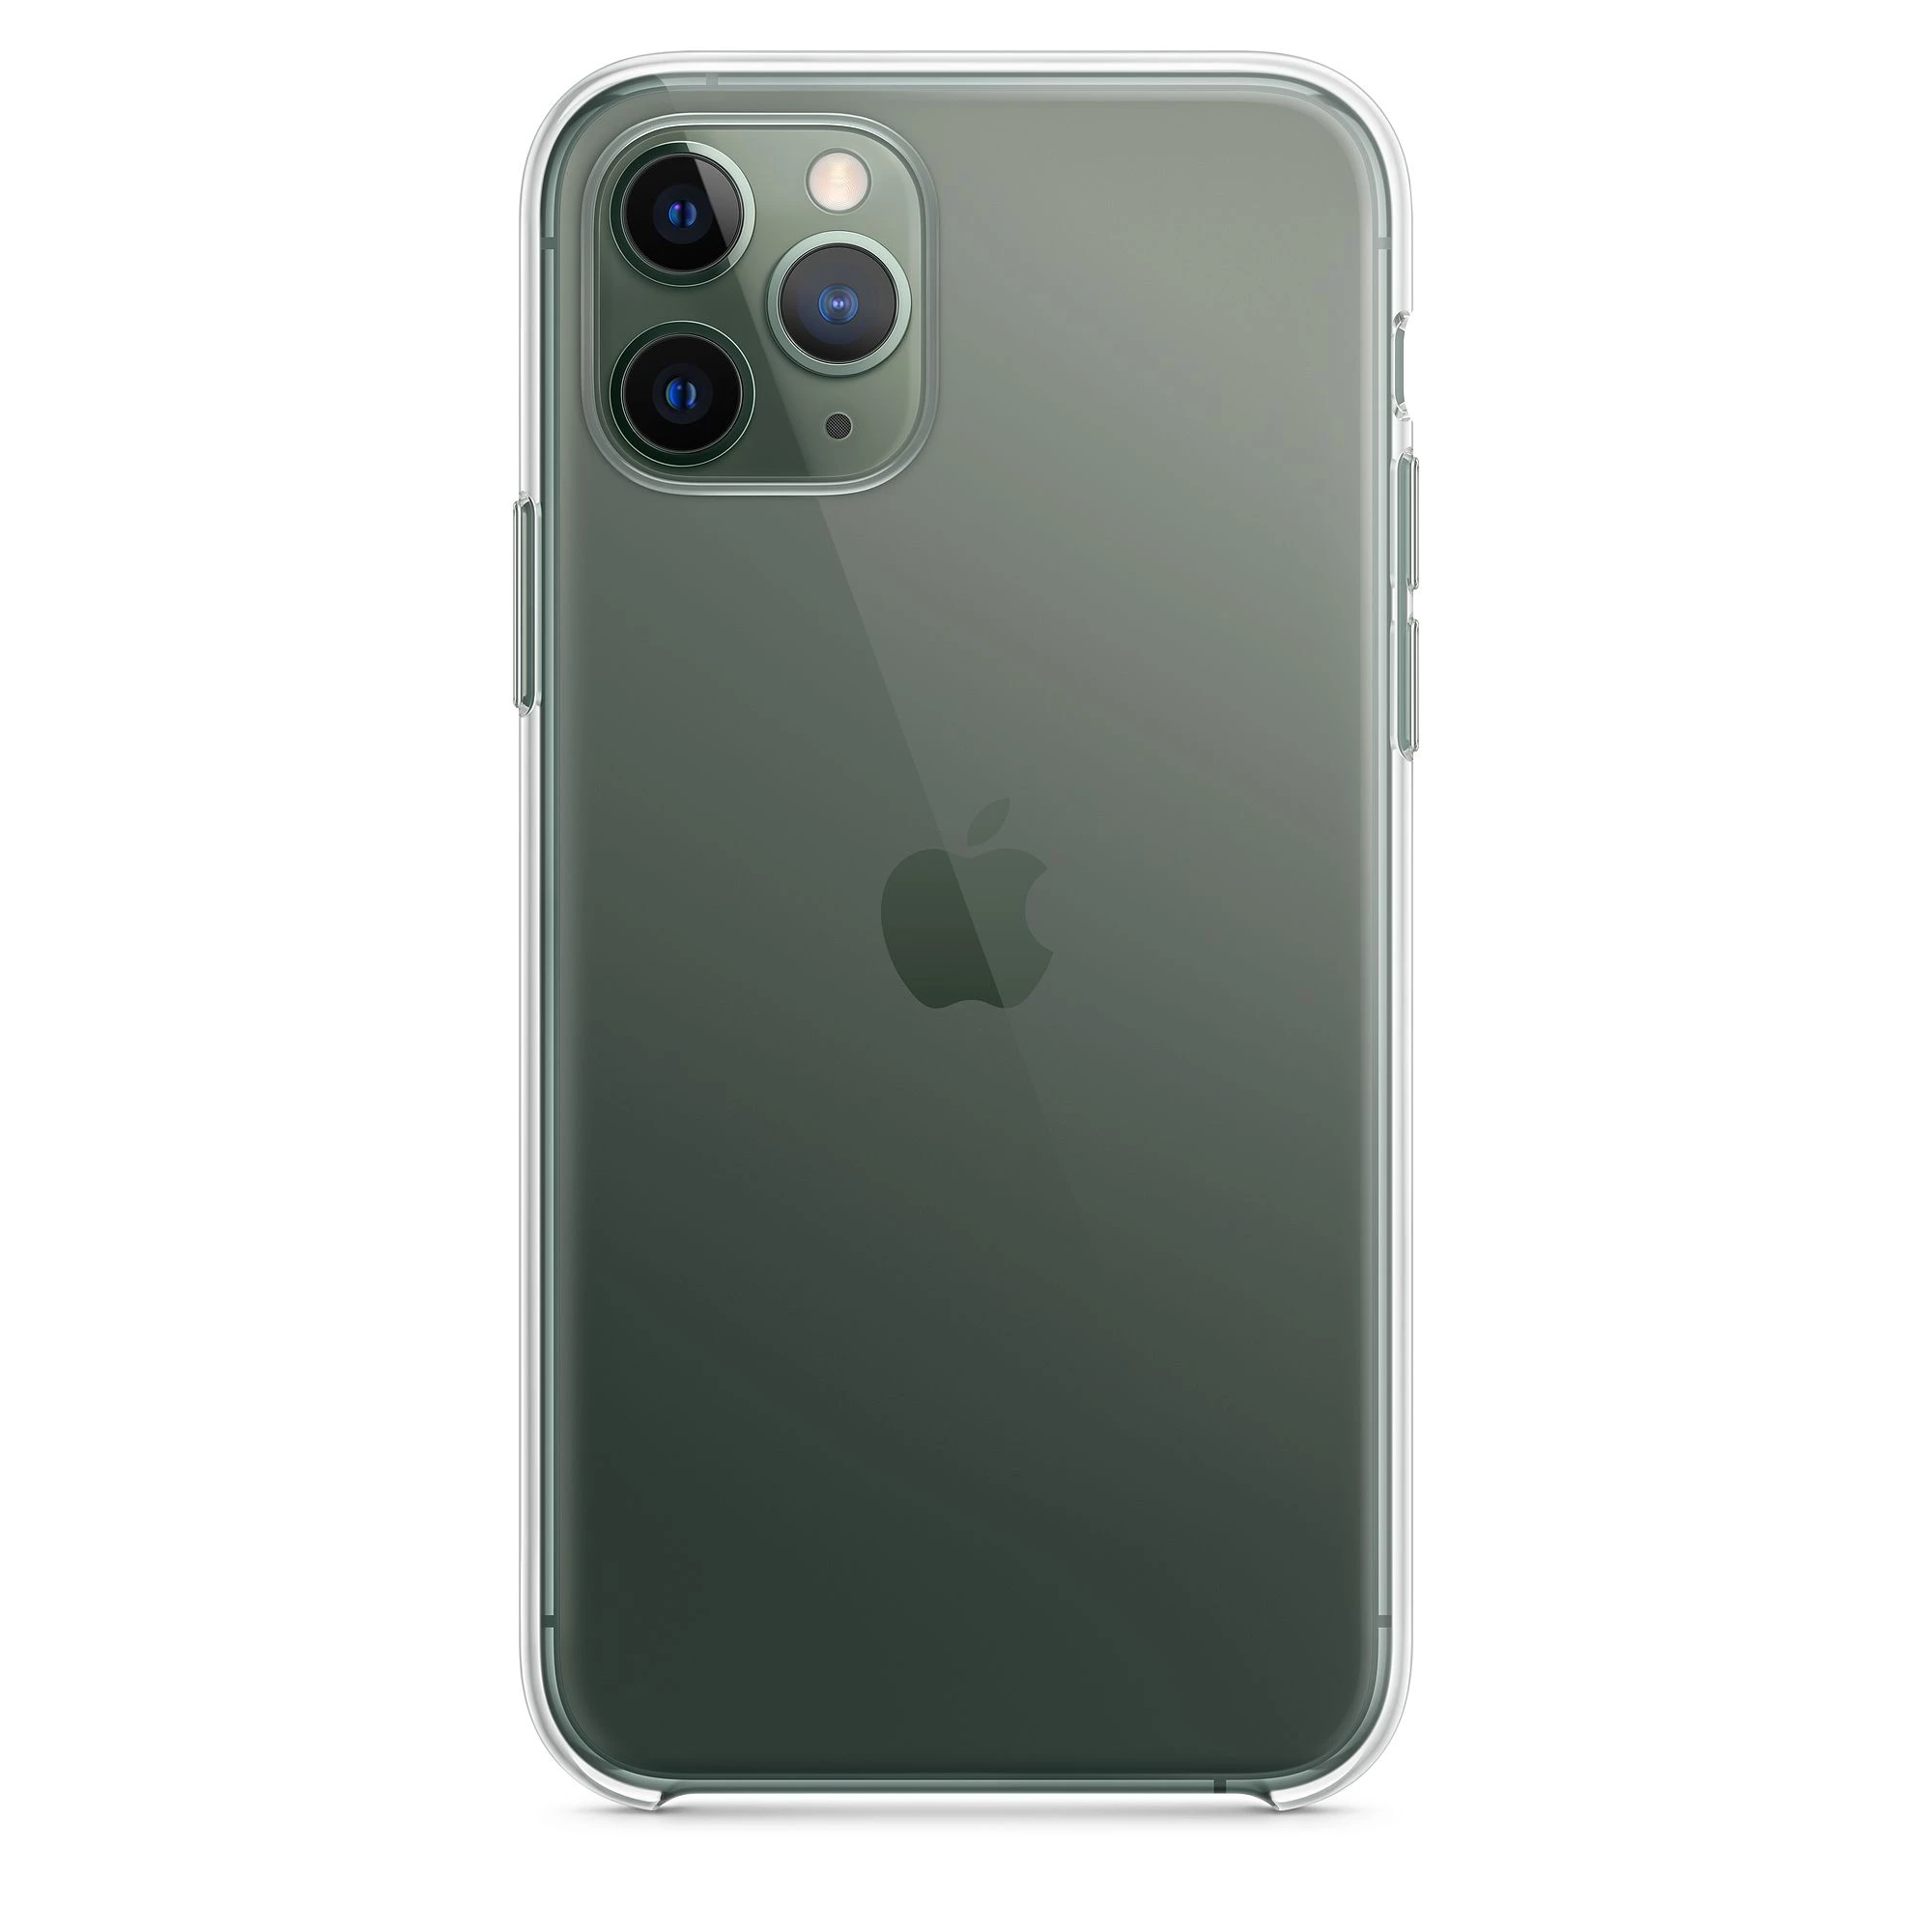 Чехол Apple iPhone 11 Pro Max Clear Case (MX0H2)